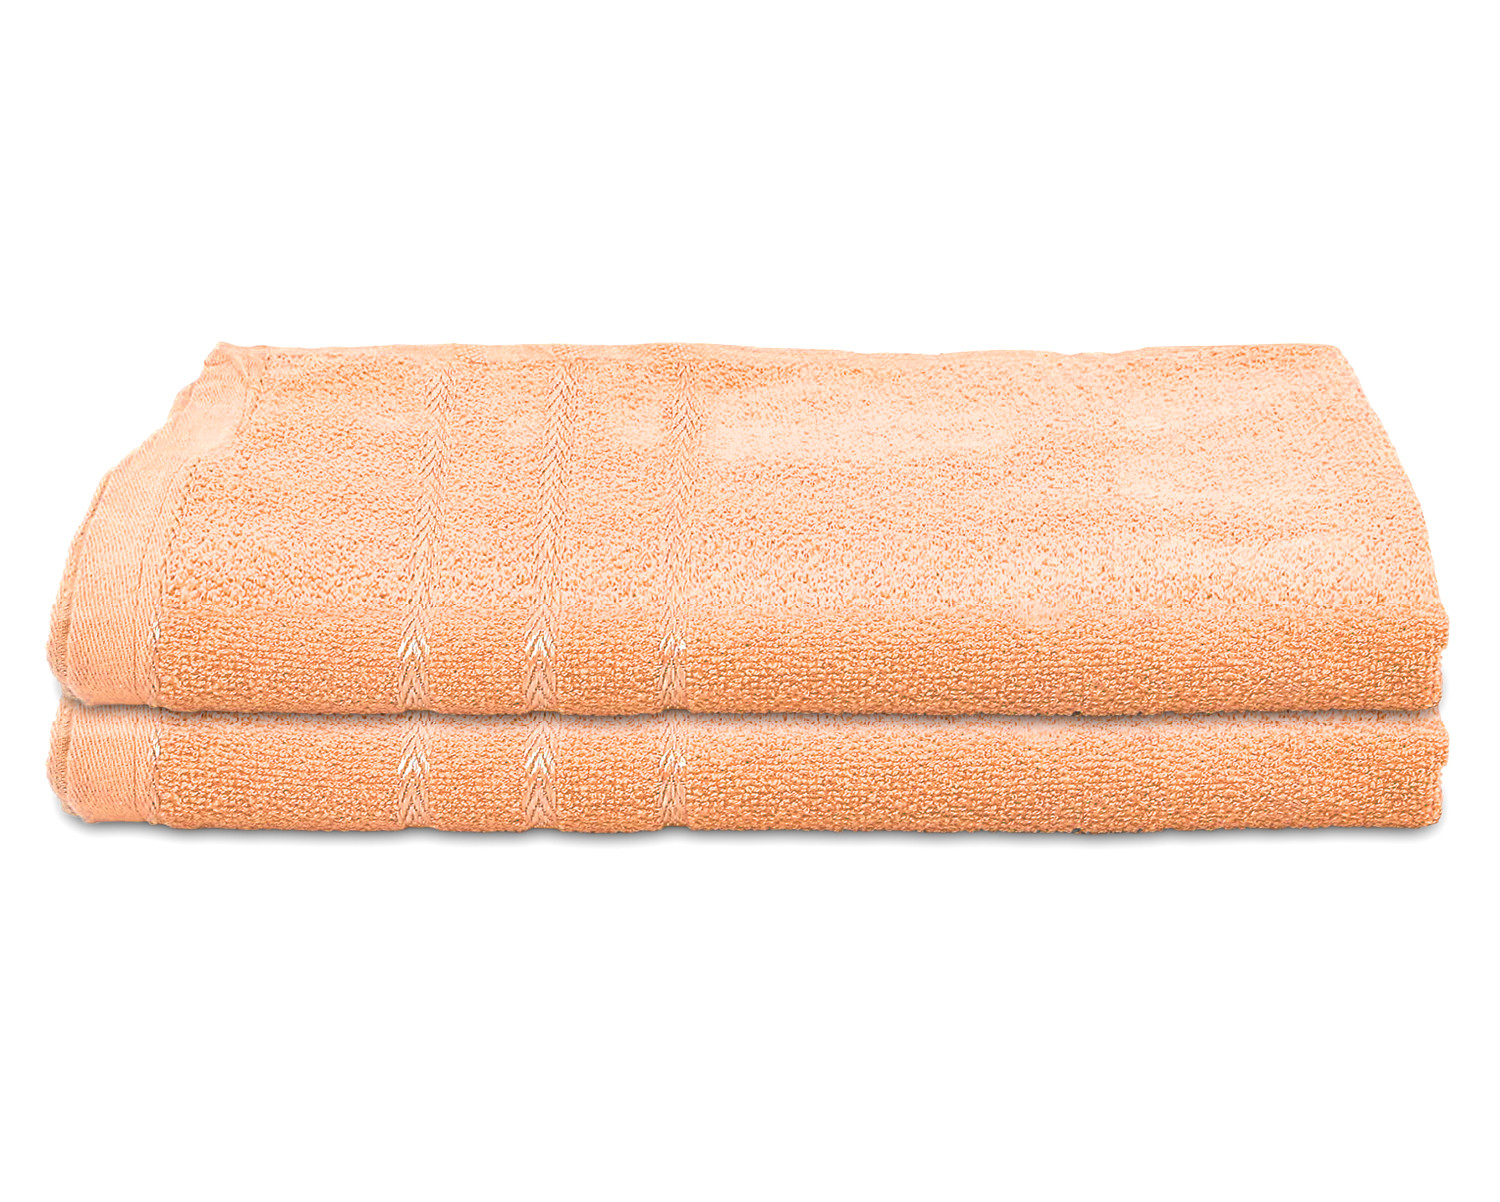 Kuber Industries Soft Cotton Bath Towel For Hands, Face, Newborn Babies, Toddlers, Children, 19